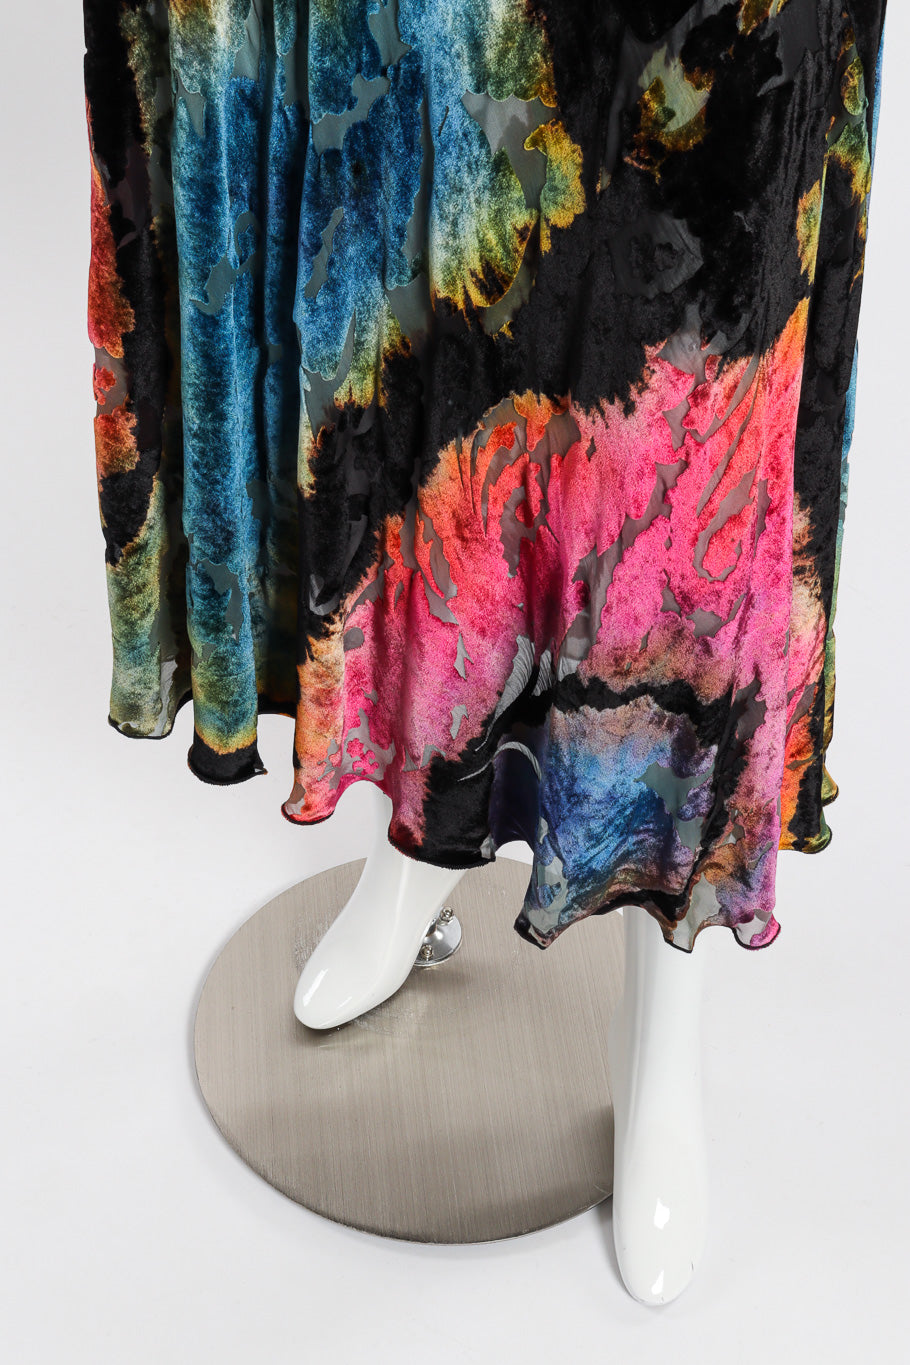 Velvet burnout dress by Carter Smith on mannequin hem close @recessla